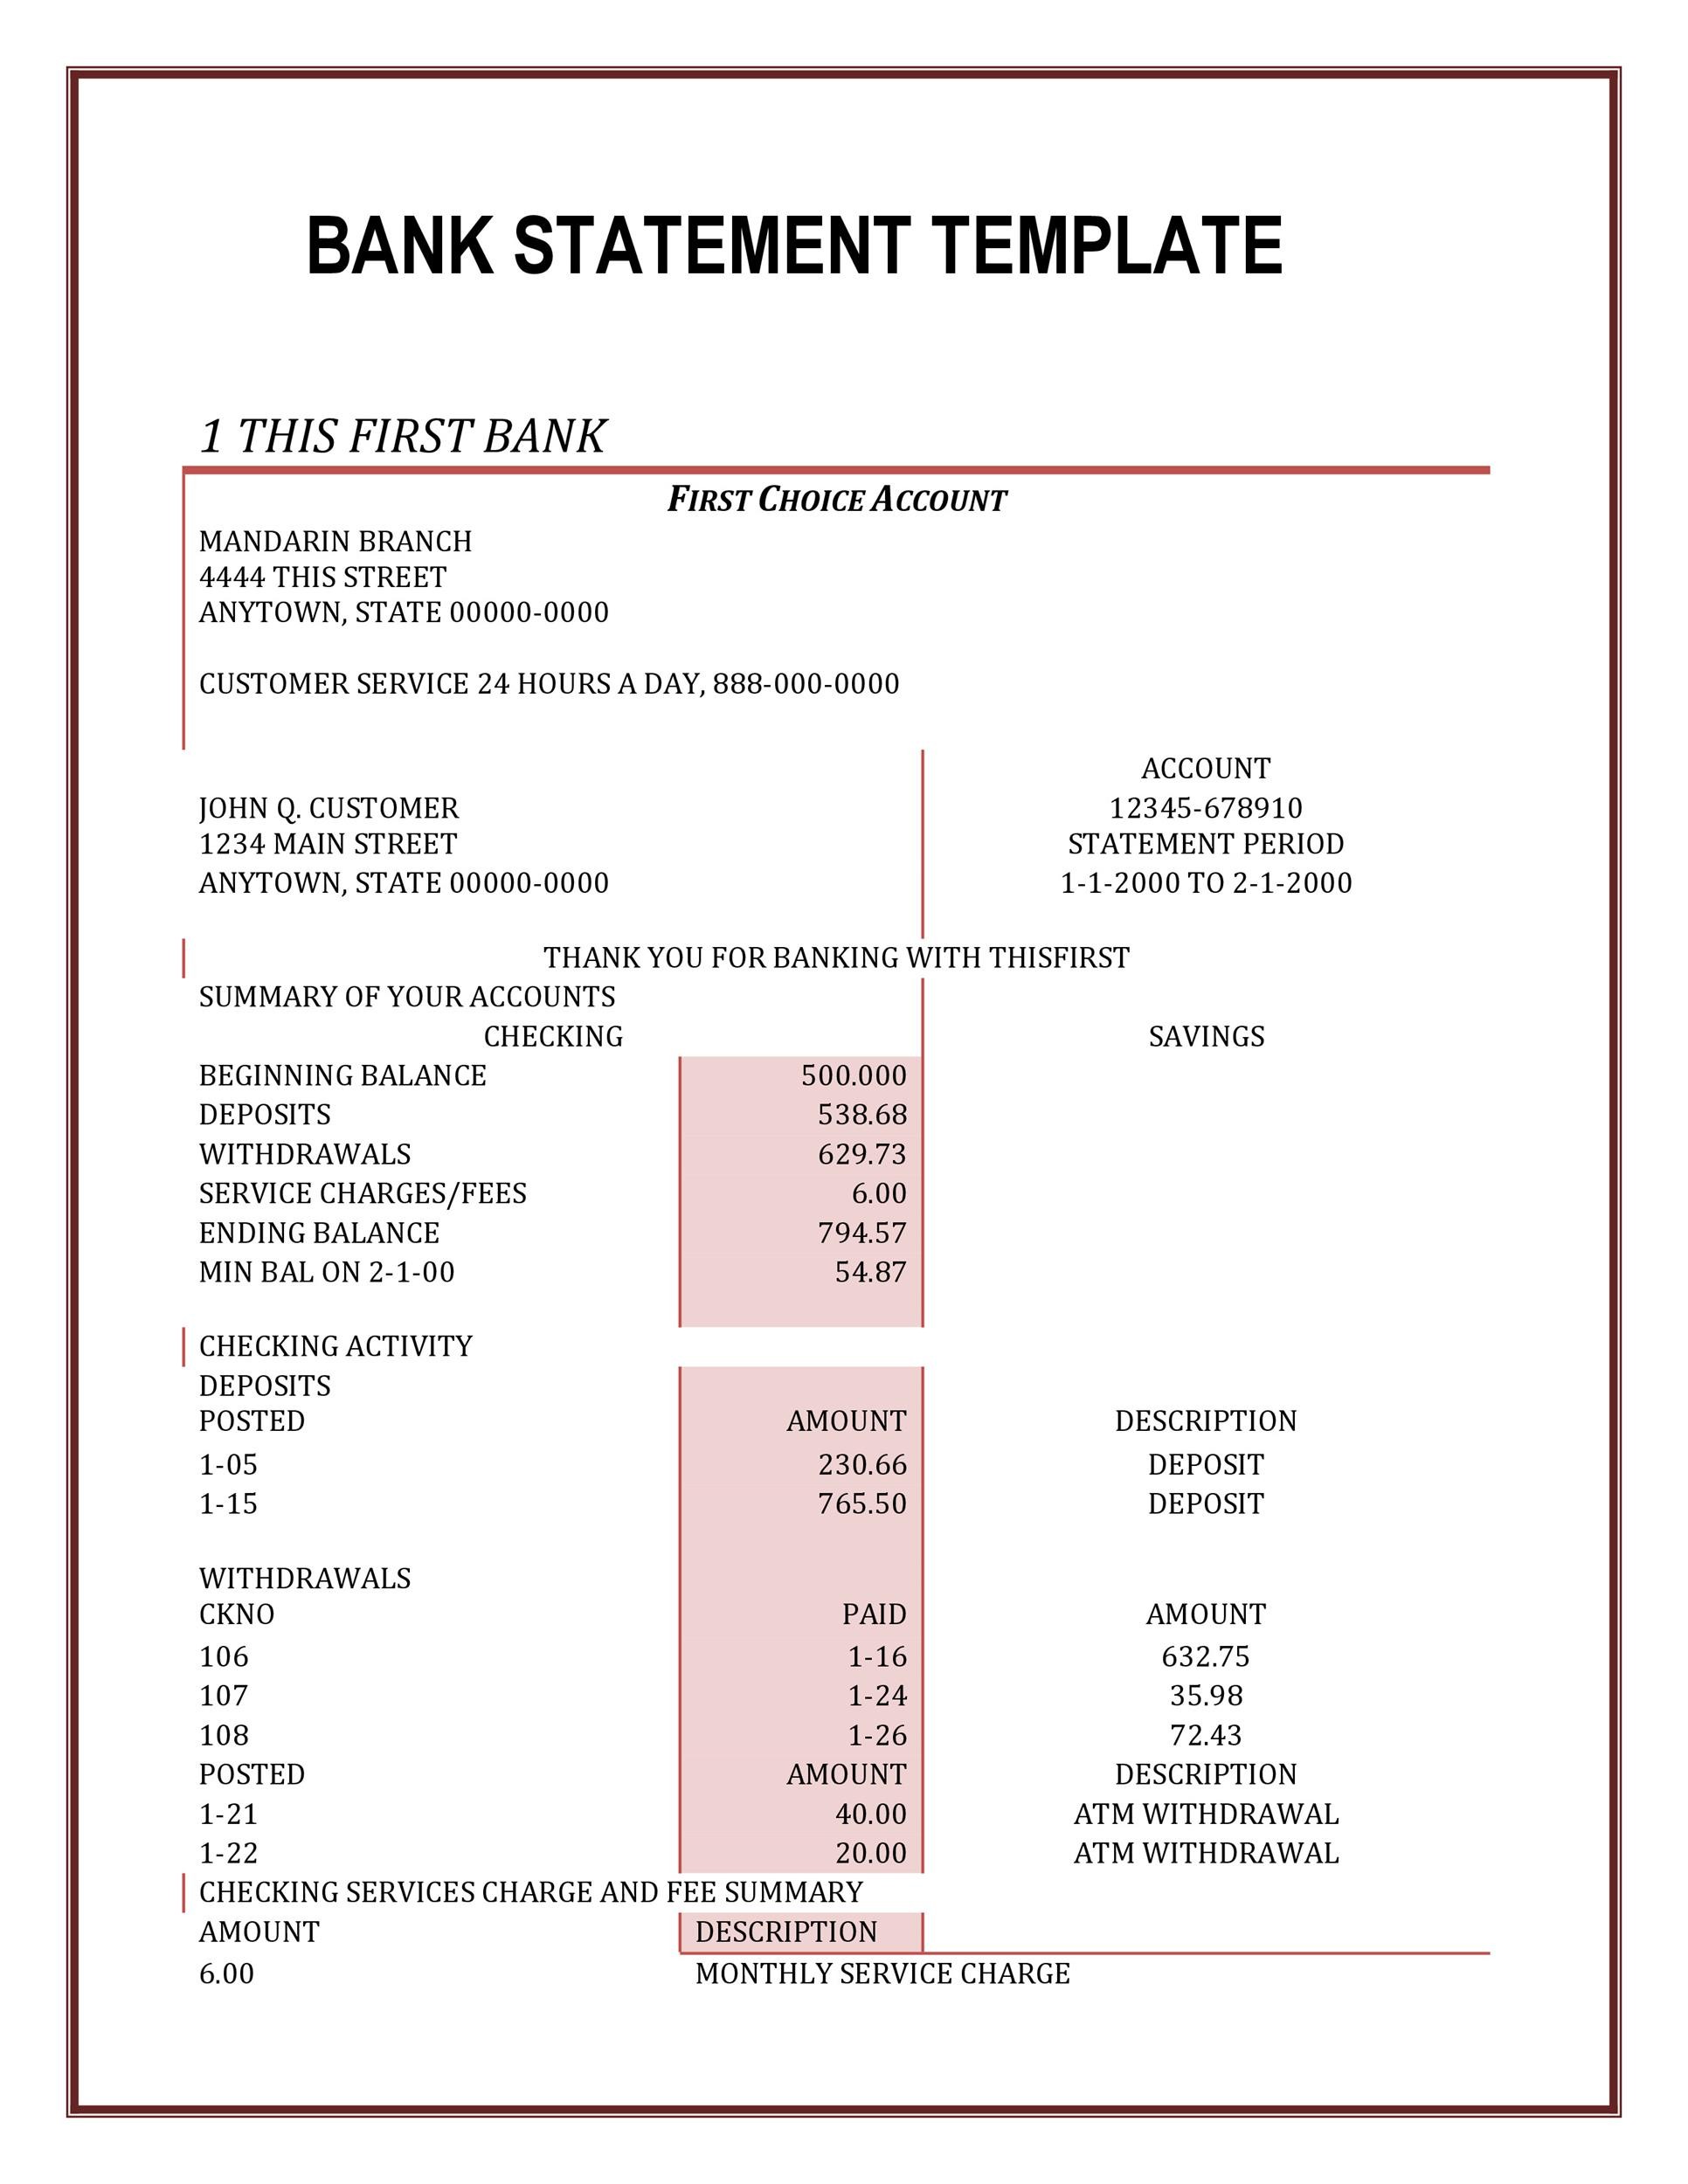 23 Editable Bank Statement Templates [FREE] ᐅ TemplateLab